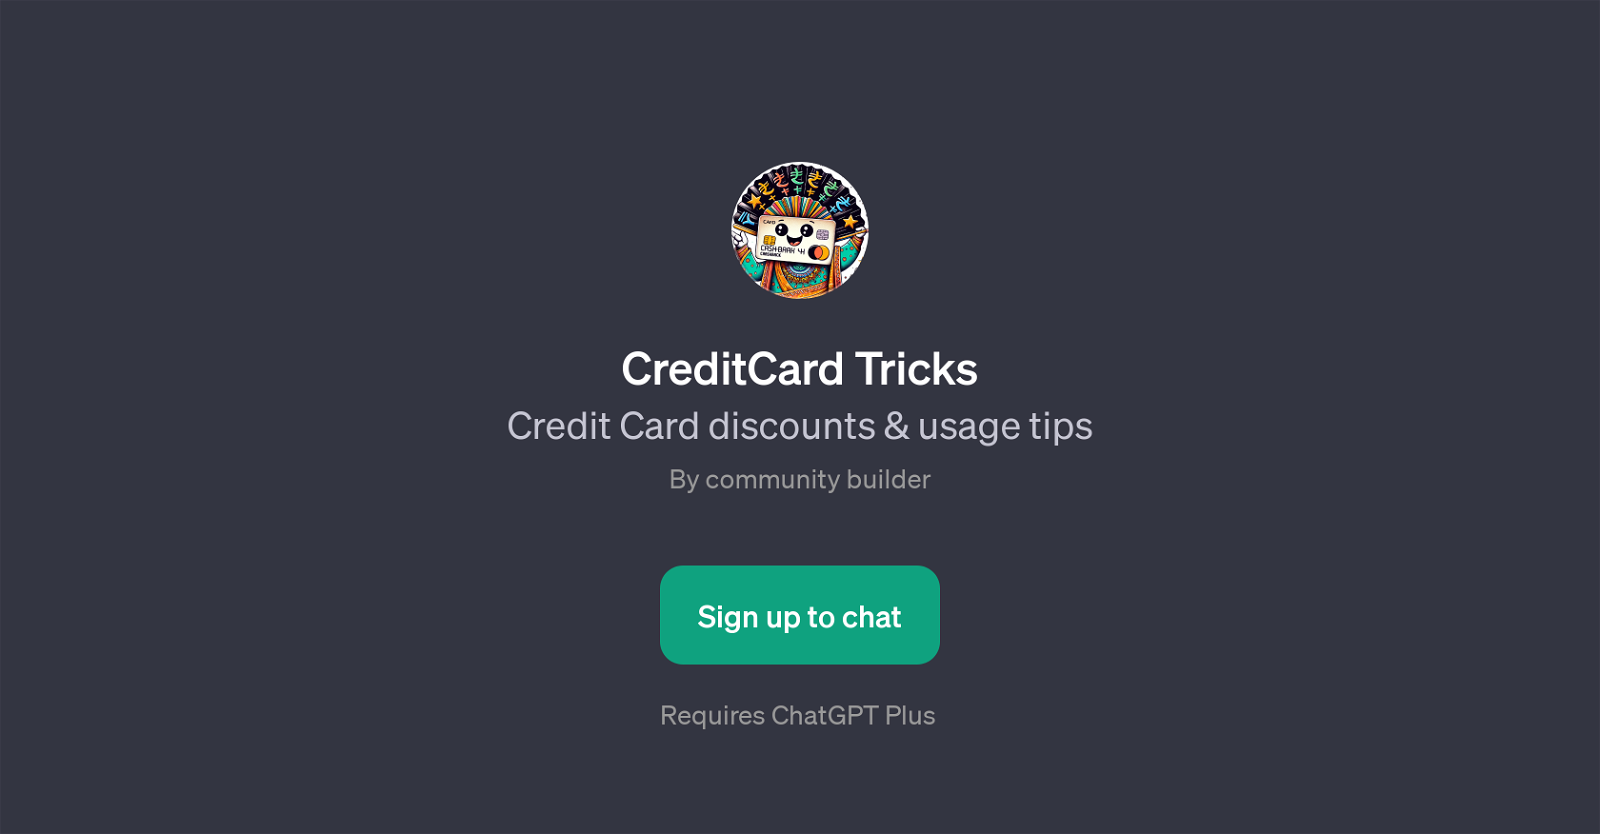 CreditCard Tricks website